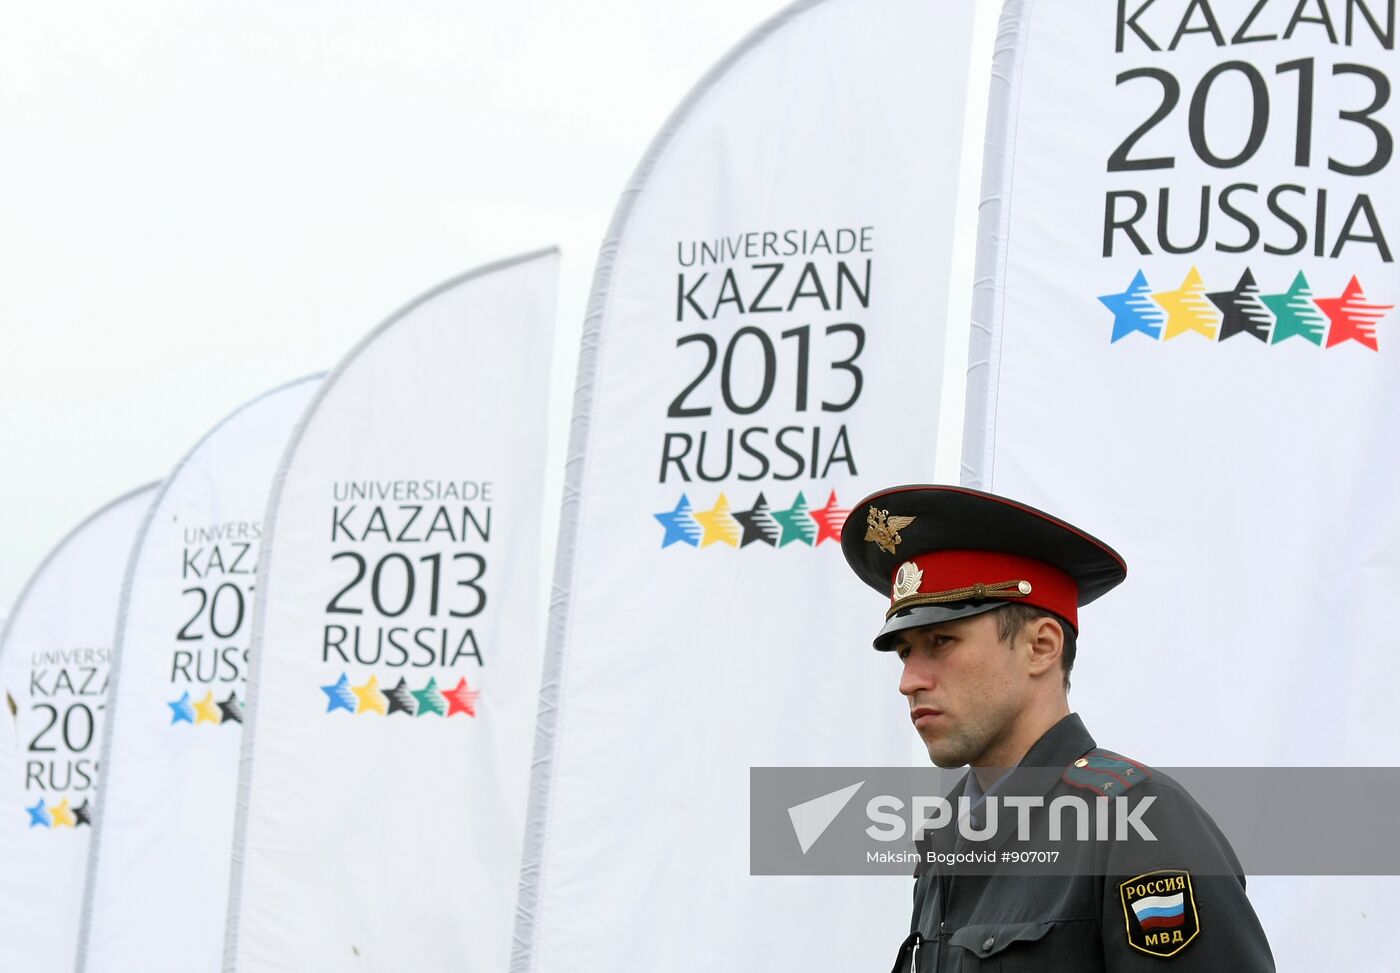 Kazan International Chess Academy time capsule laying ceremony